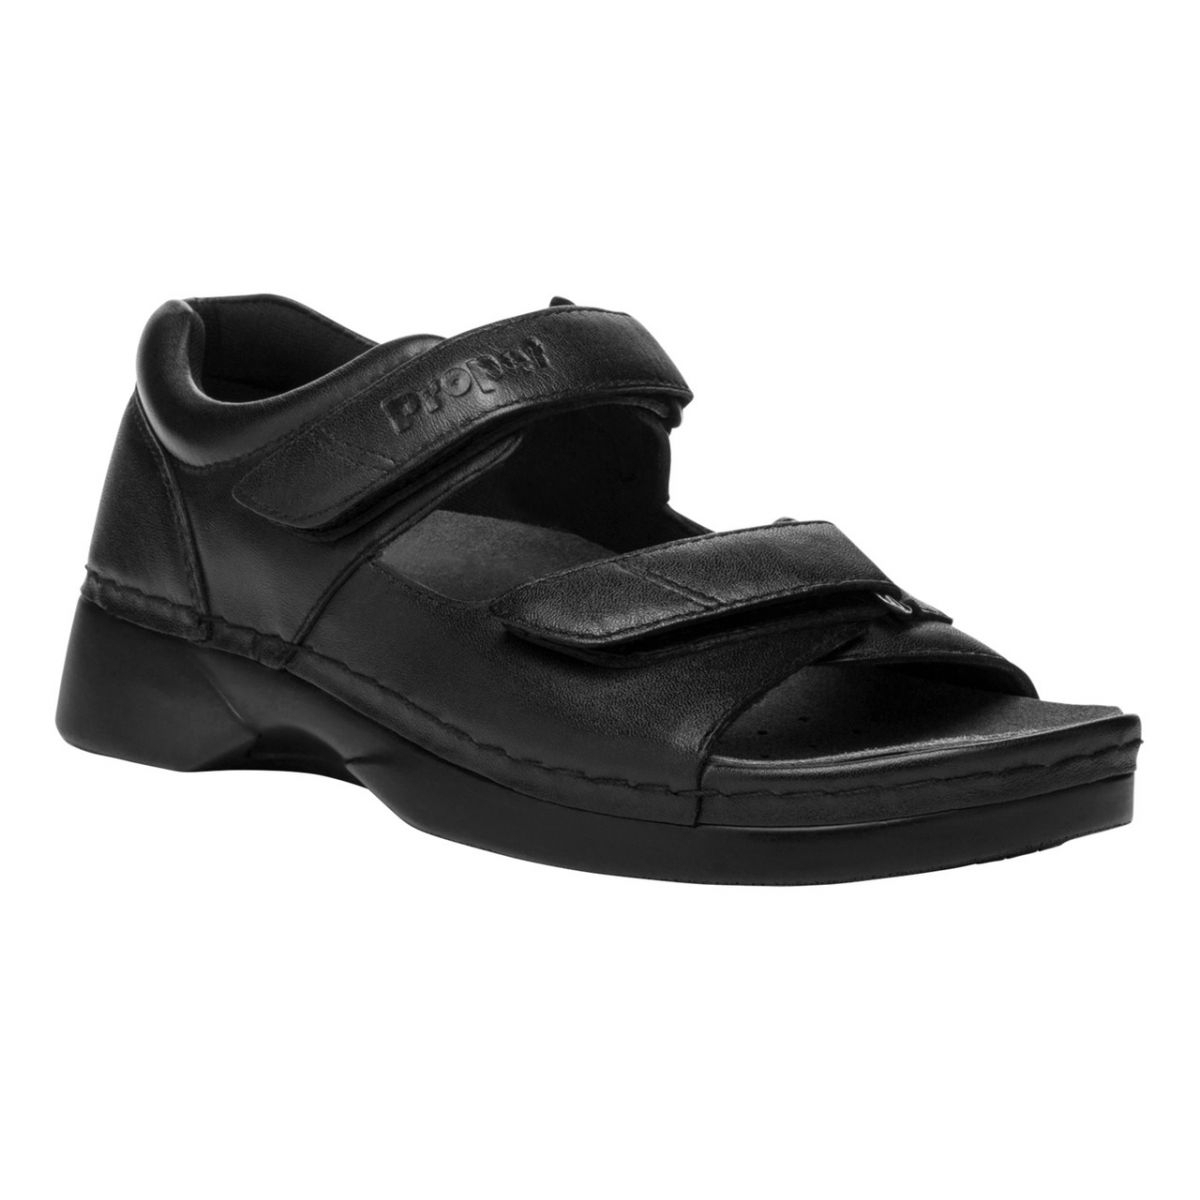 Propet Women's Pedic Walker Sandal Black - W0089B BLACK - BLACK, 9.5-W